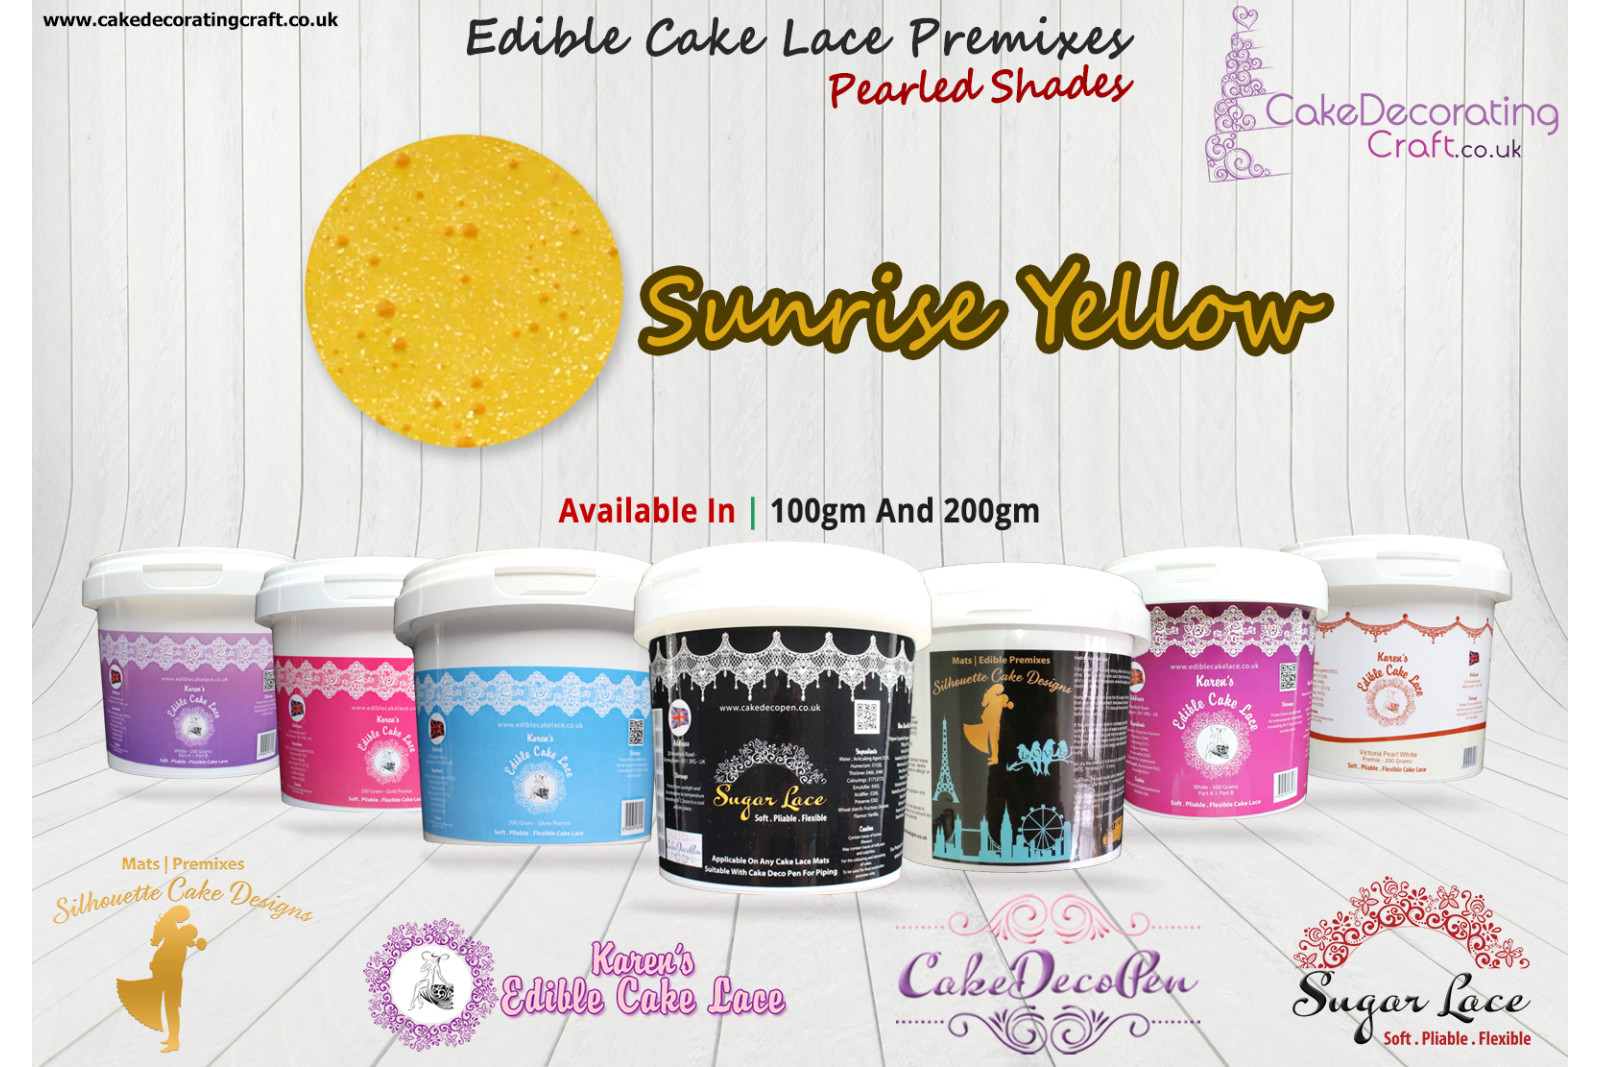 Sunrise Yellow | Edible Cake Lace Premixes | Pearled Shade | 200 Grams